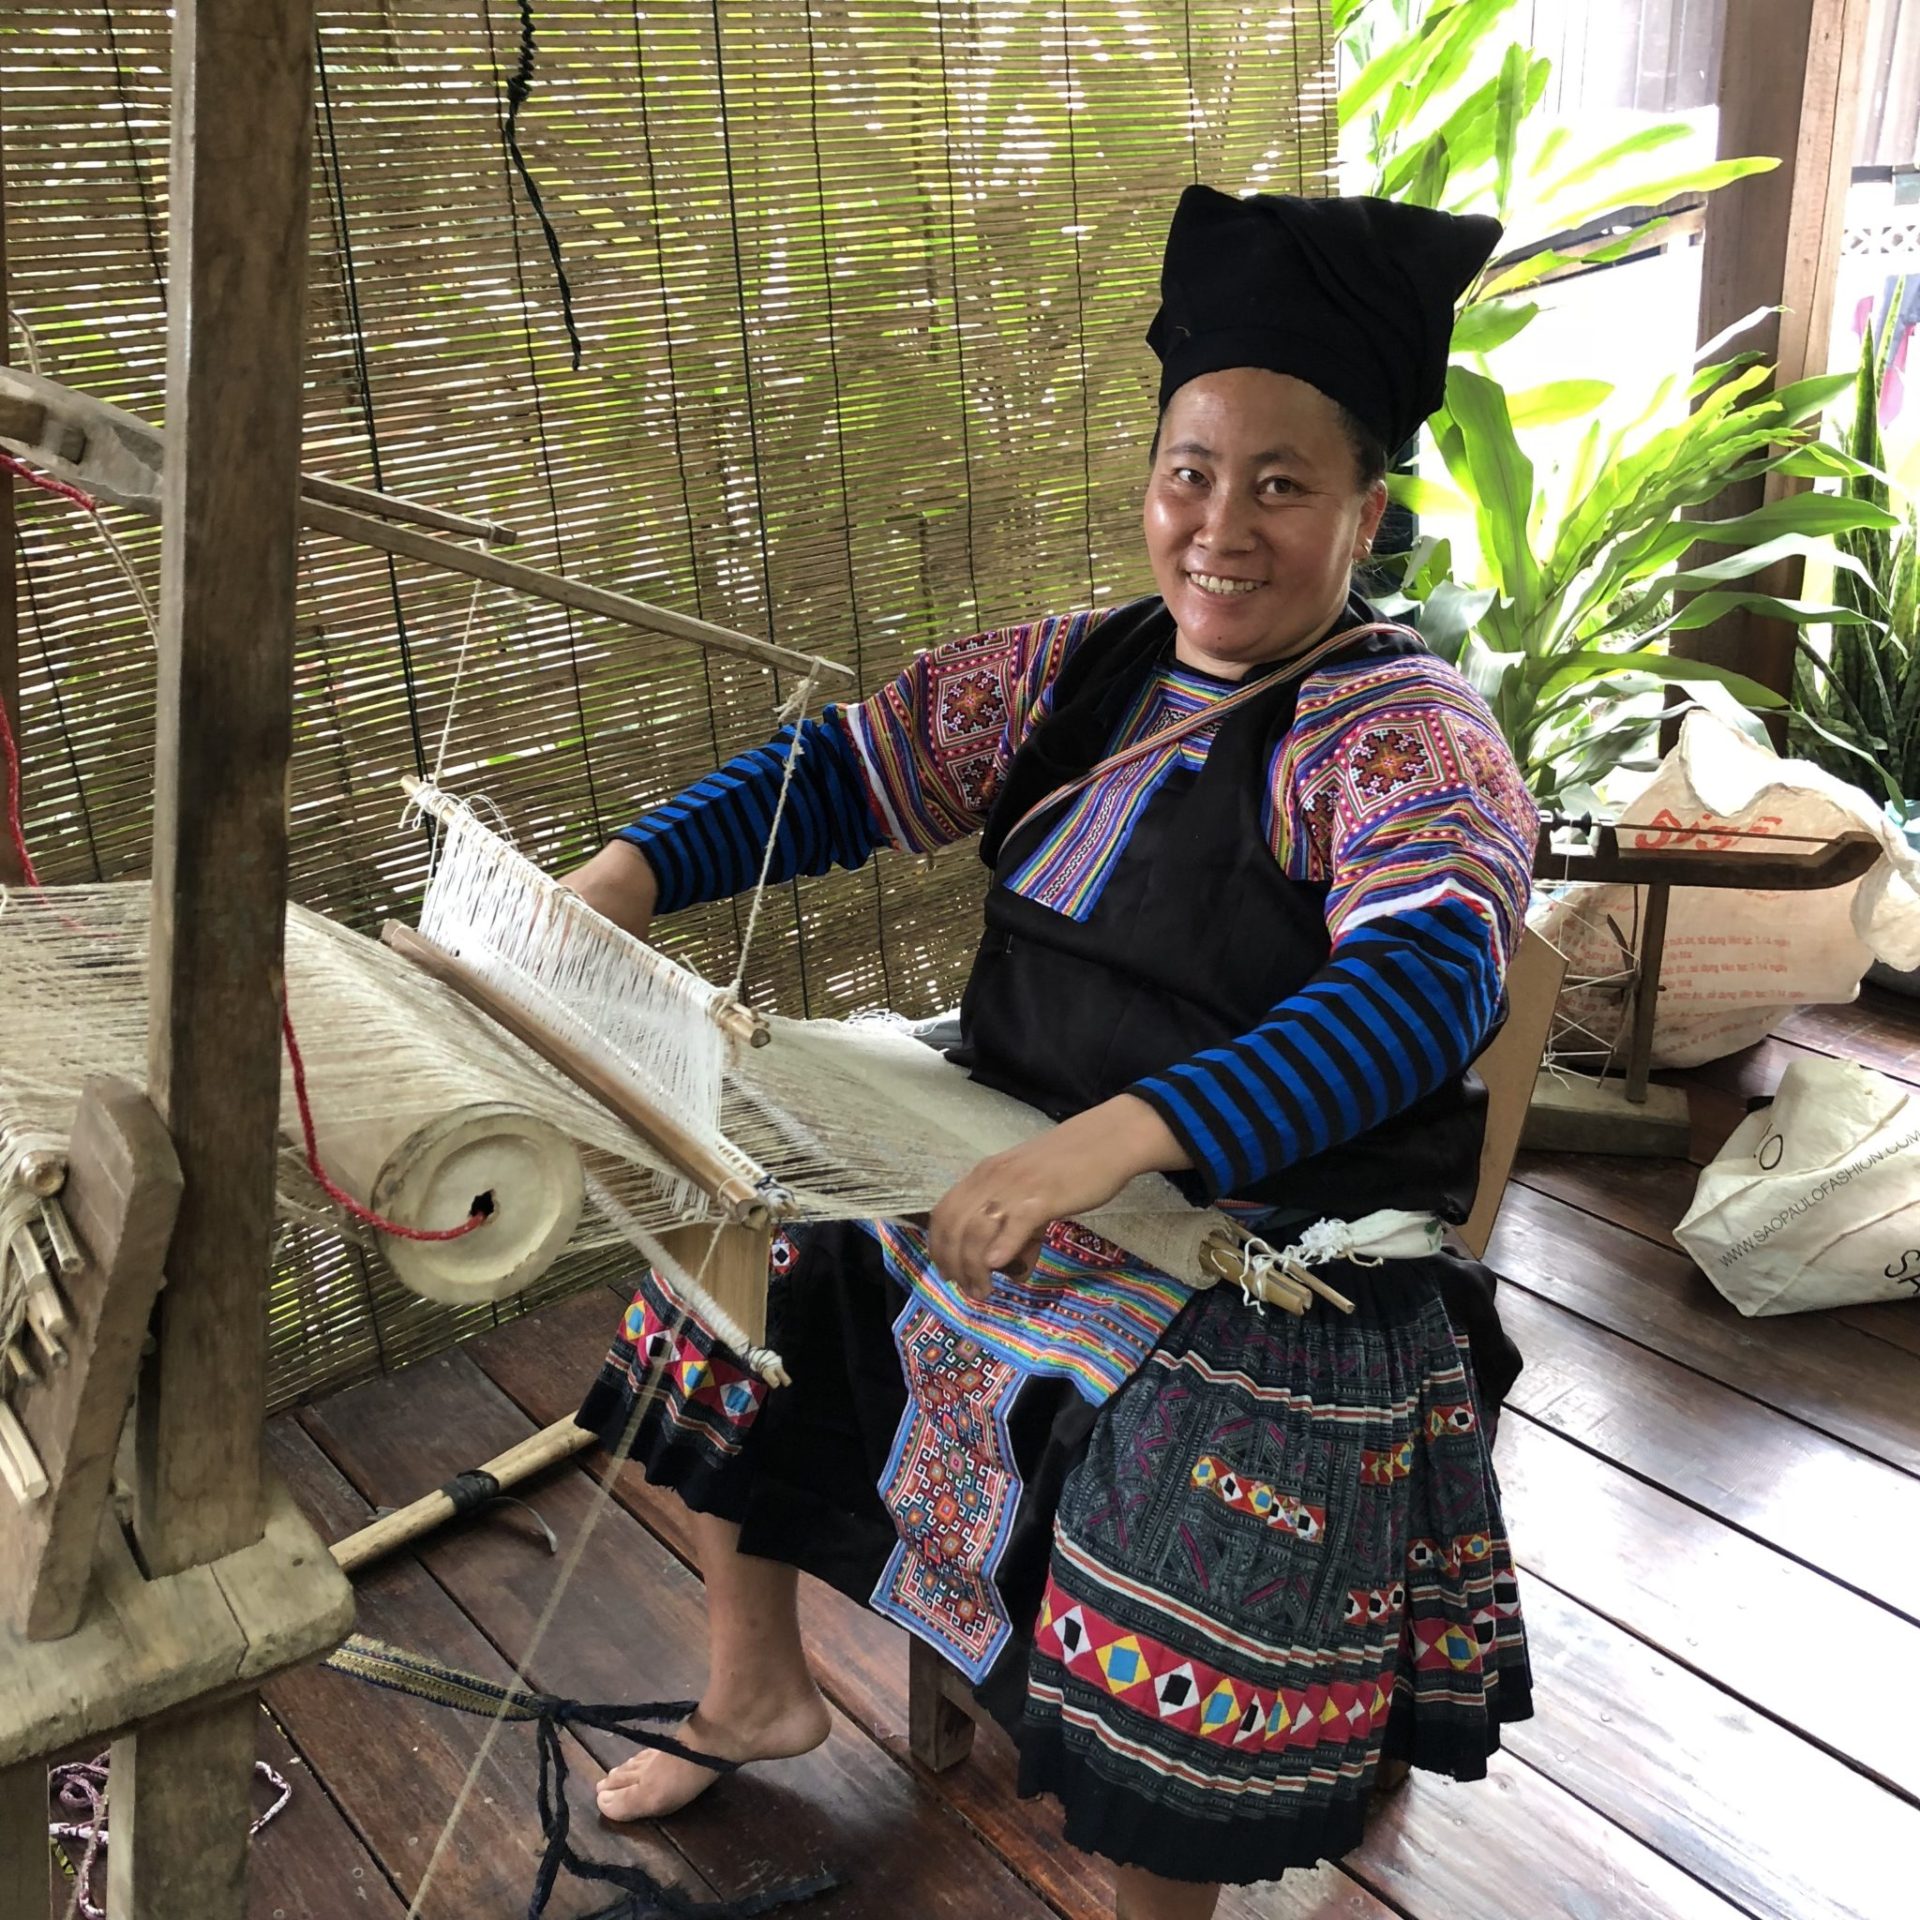 Hmong woman weaving hemp